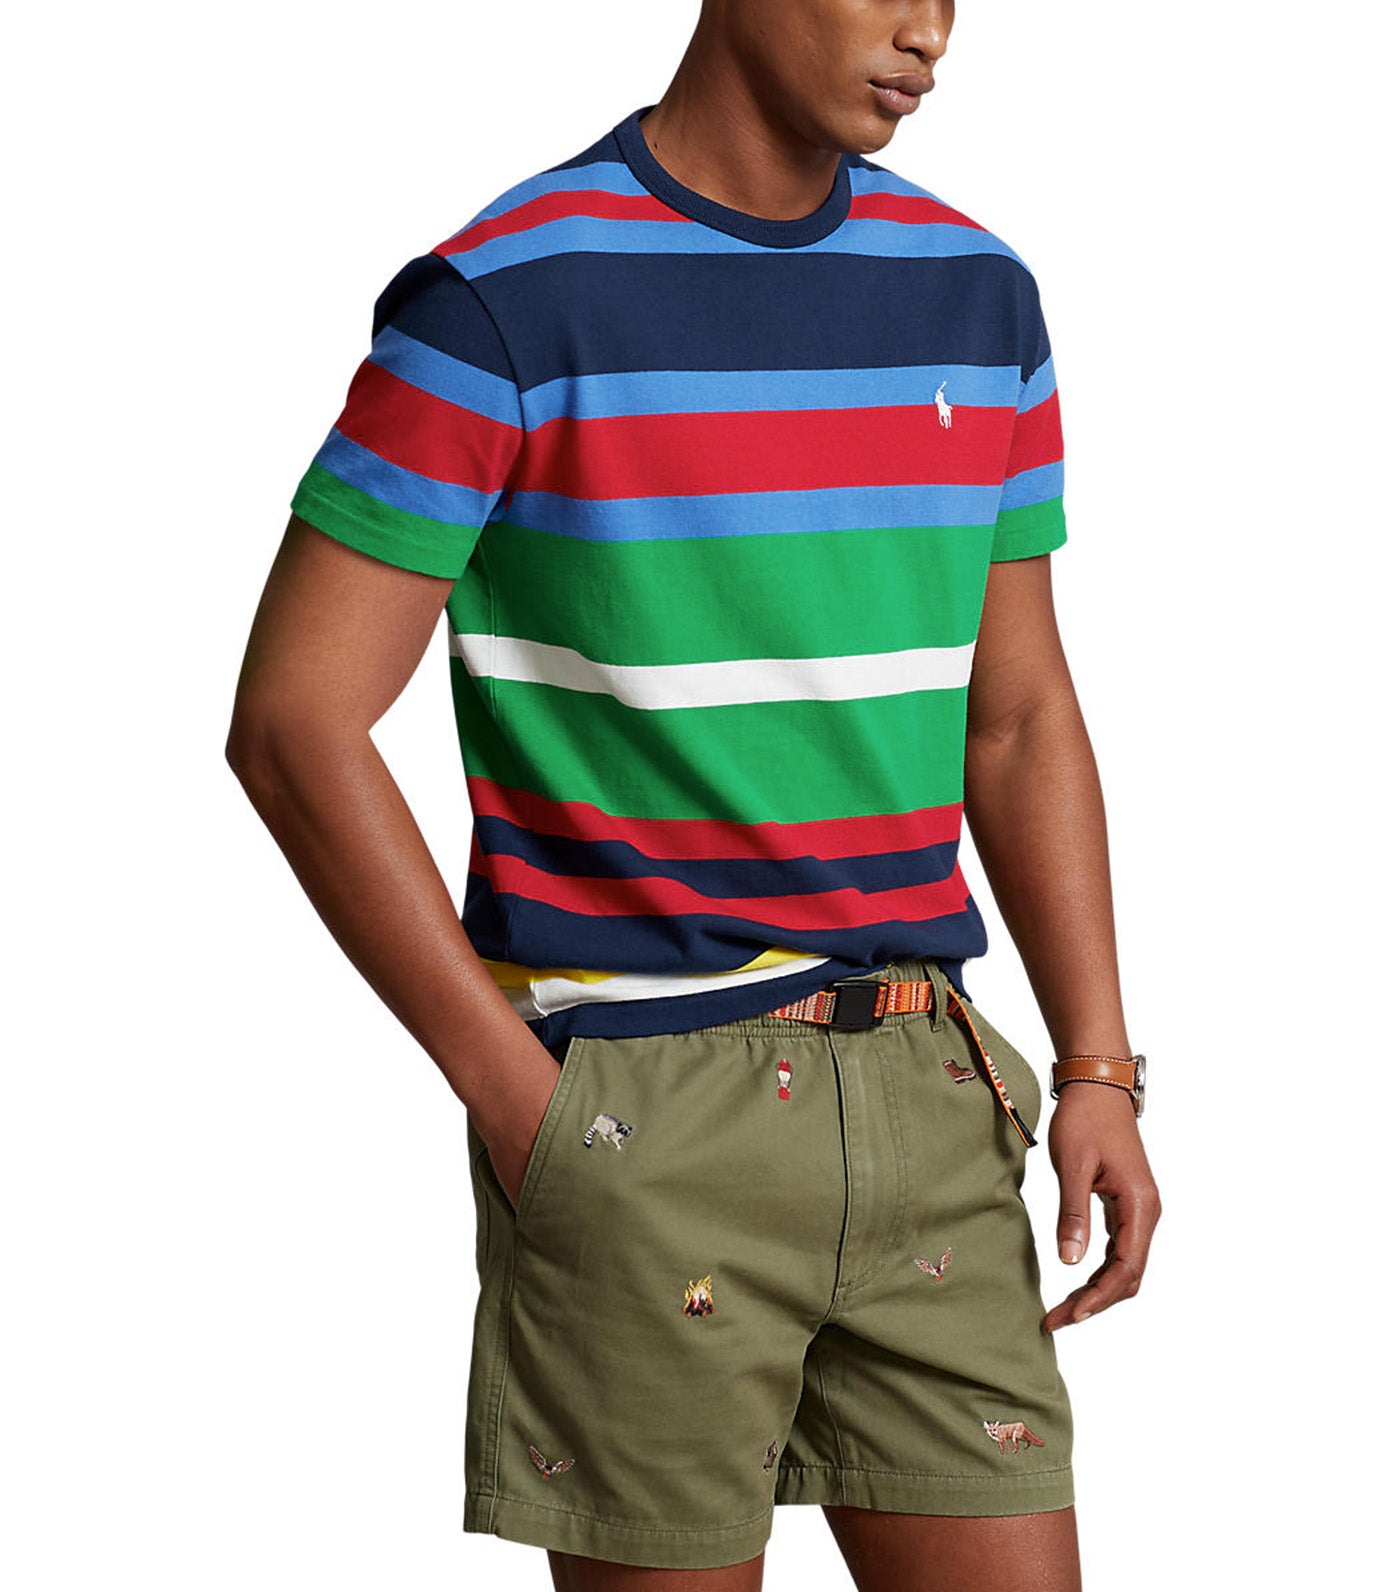 Men's Classic Fit Striped Jersey T-Shirt Newport Navy Multi